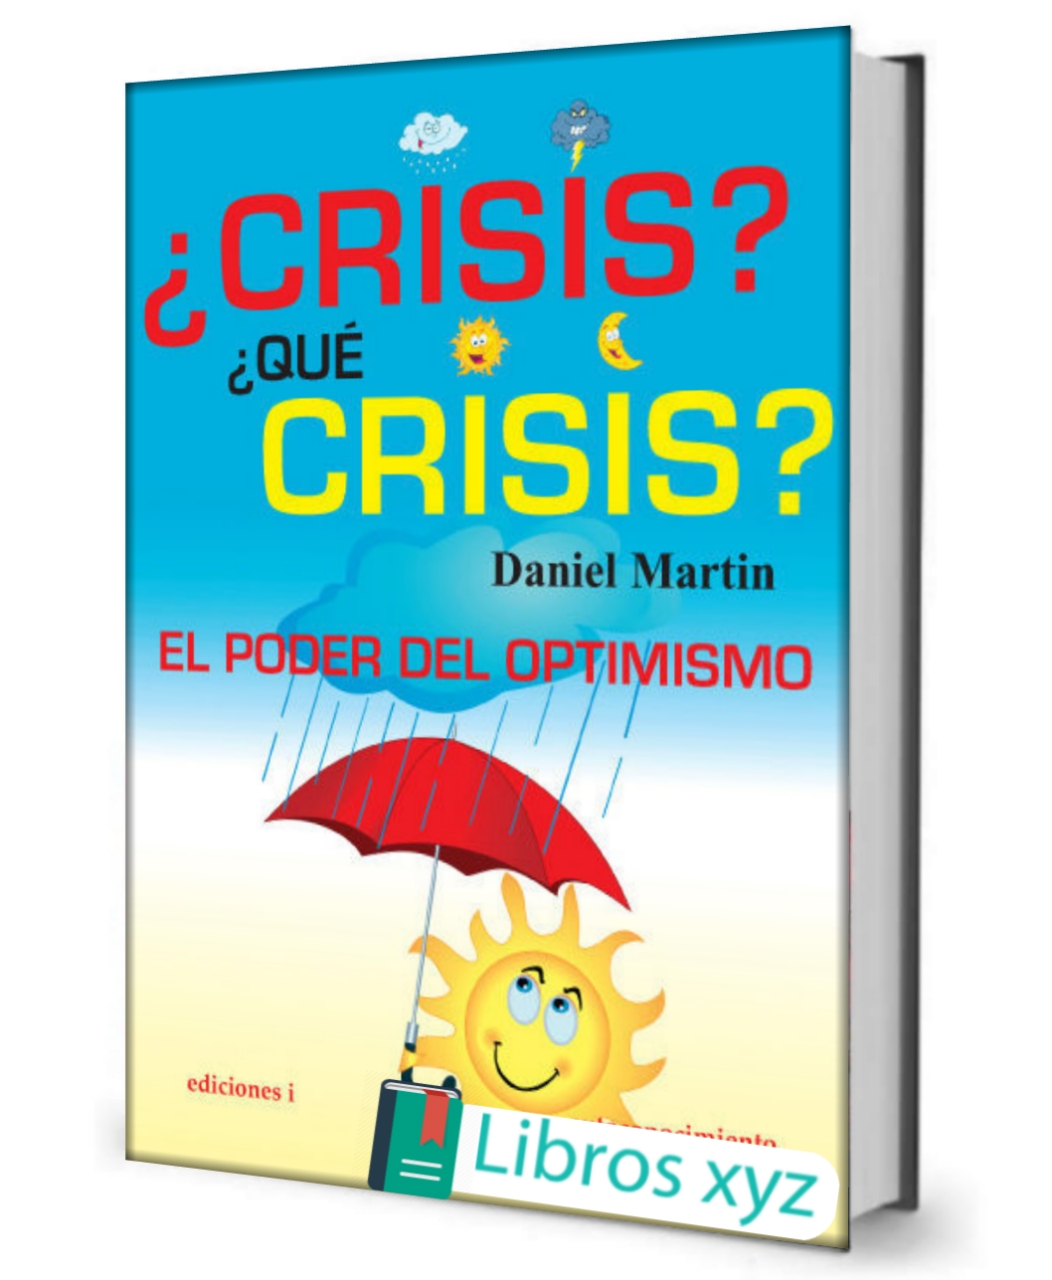 [PDF] Crisis, que crisis - Daniel Martín - Descargar libros Gratis